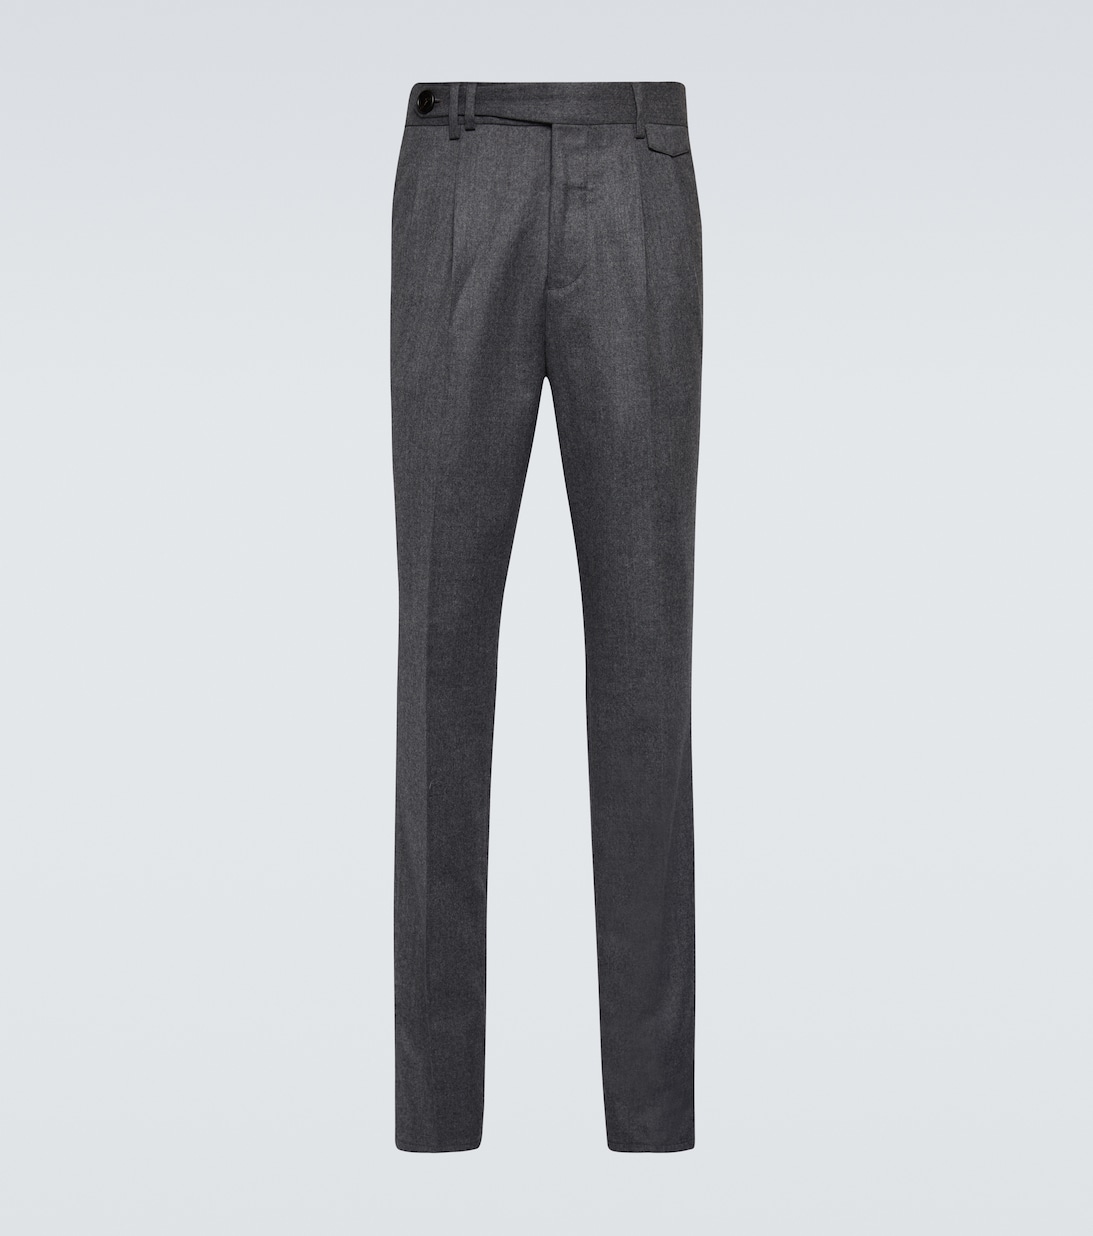 Узкие брюки из натуральной шерсти Brunello Cucinelli, серый узкие брюки из натуральной шерсти ami paris серый